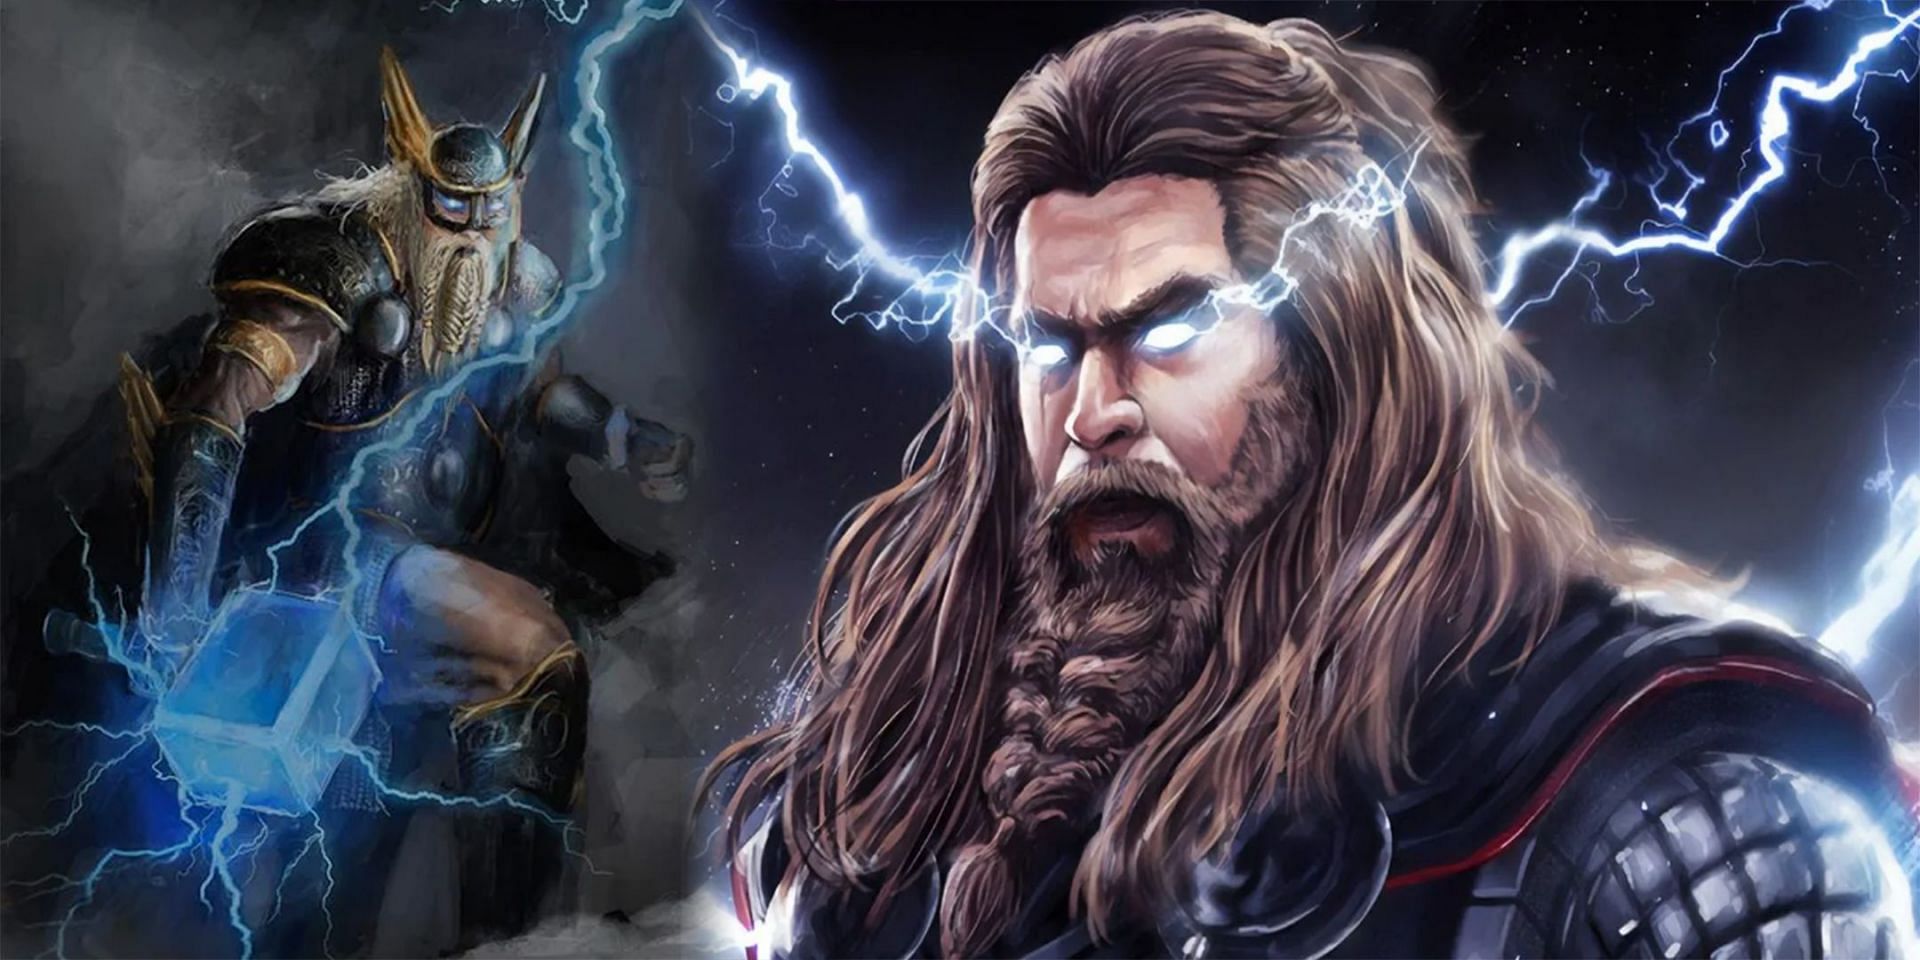 In Norse mythology, Thor is the god of thunder, lightning, and storms. (Image via Sportskeeda)